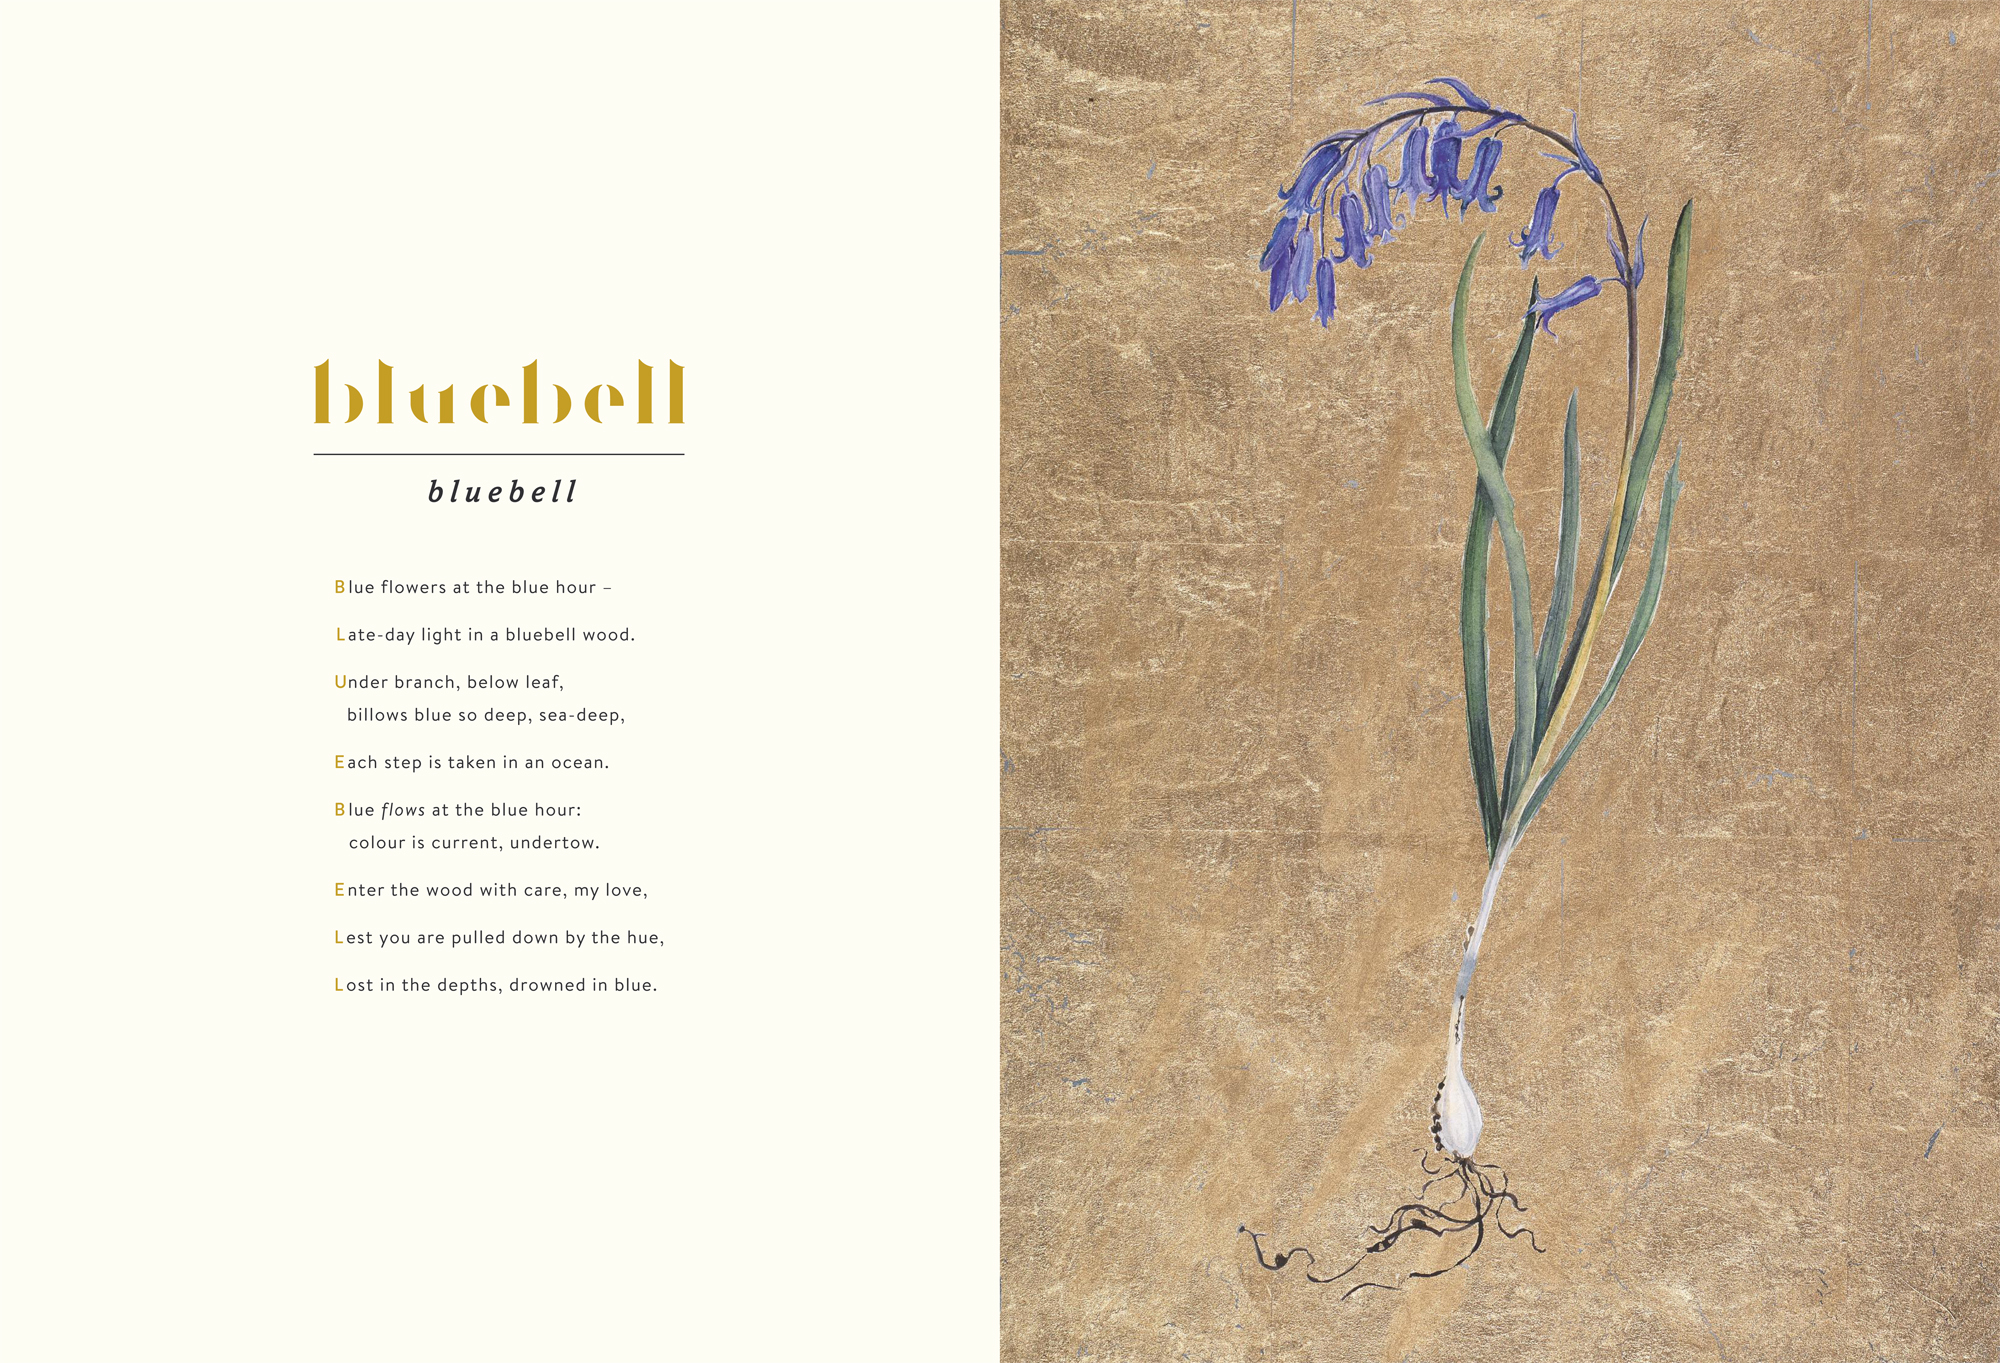 Bluebell © Jackie Morris & Robert Macfarlane